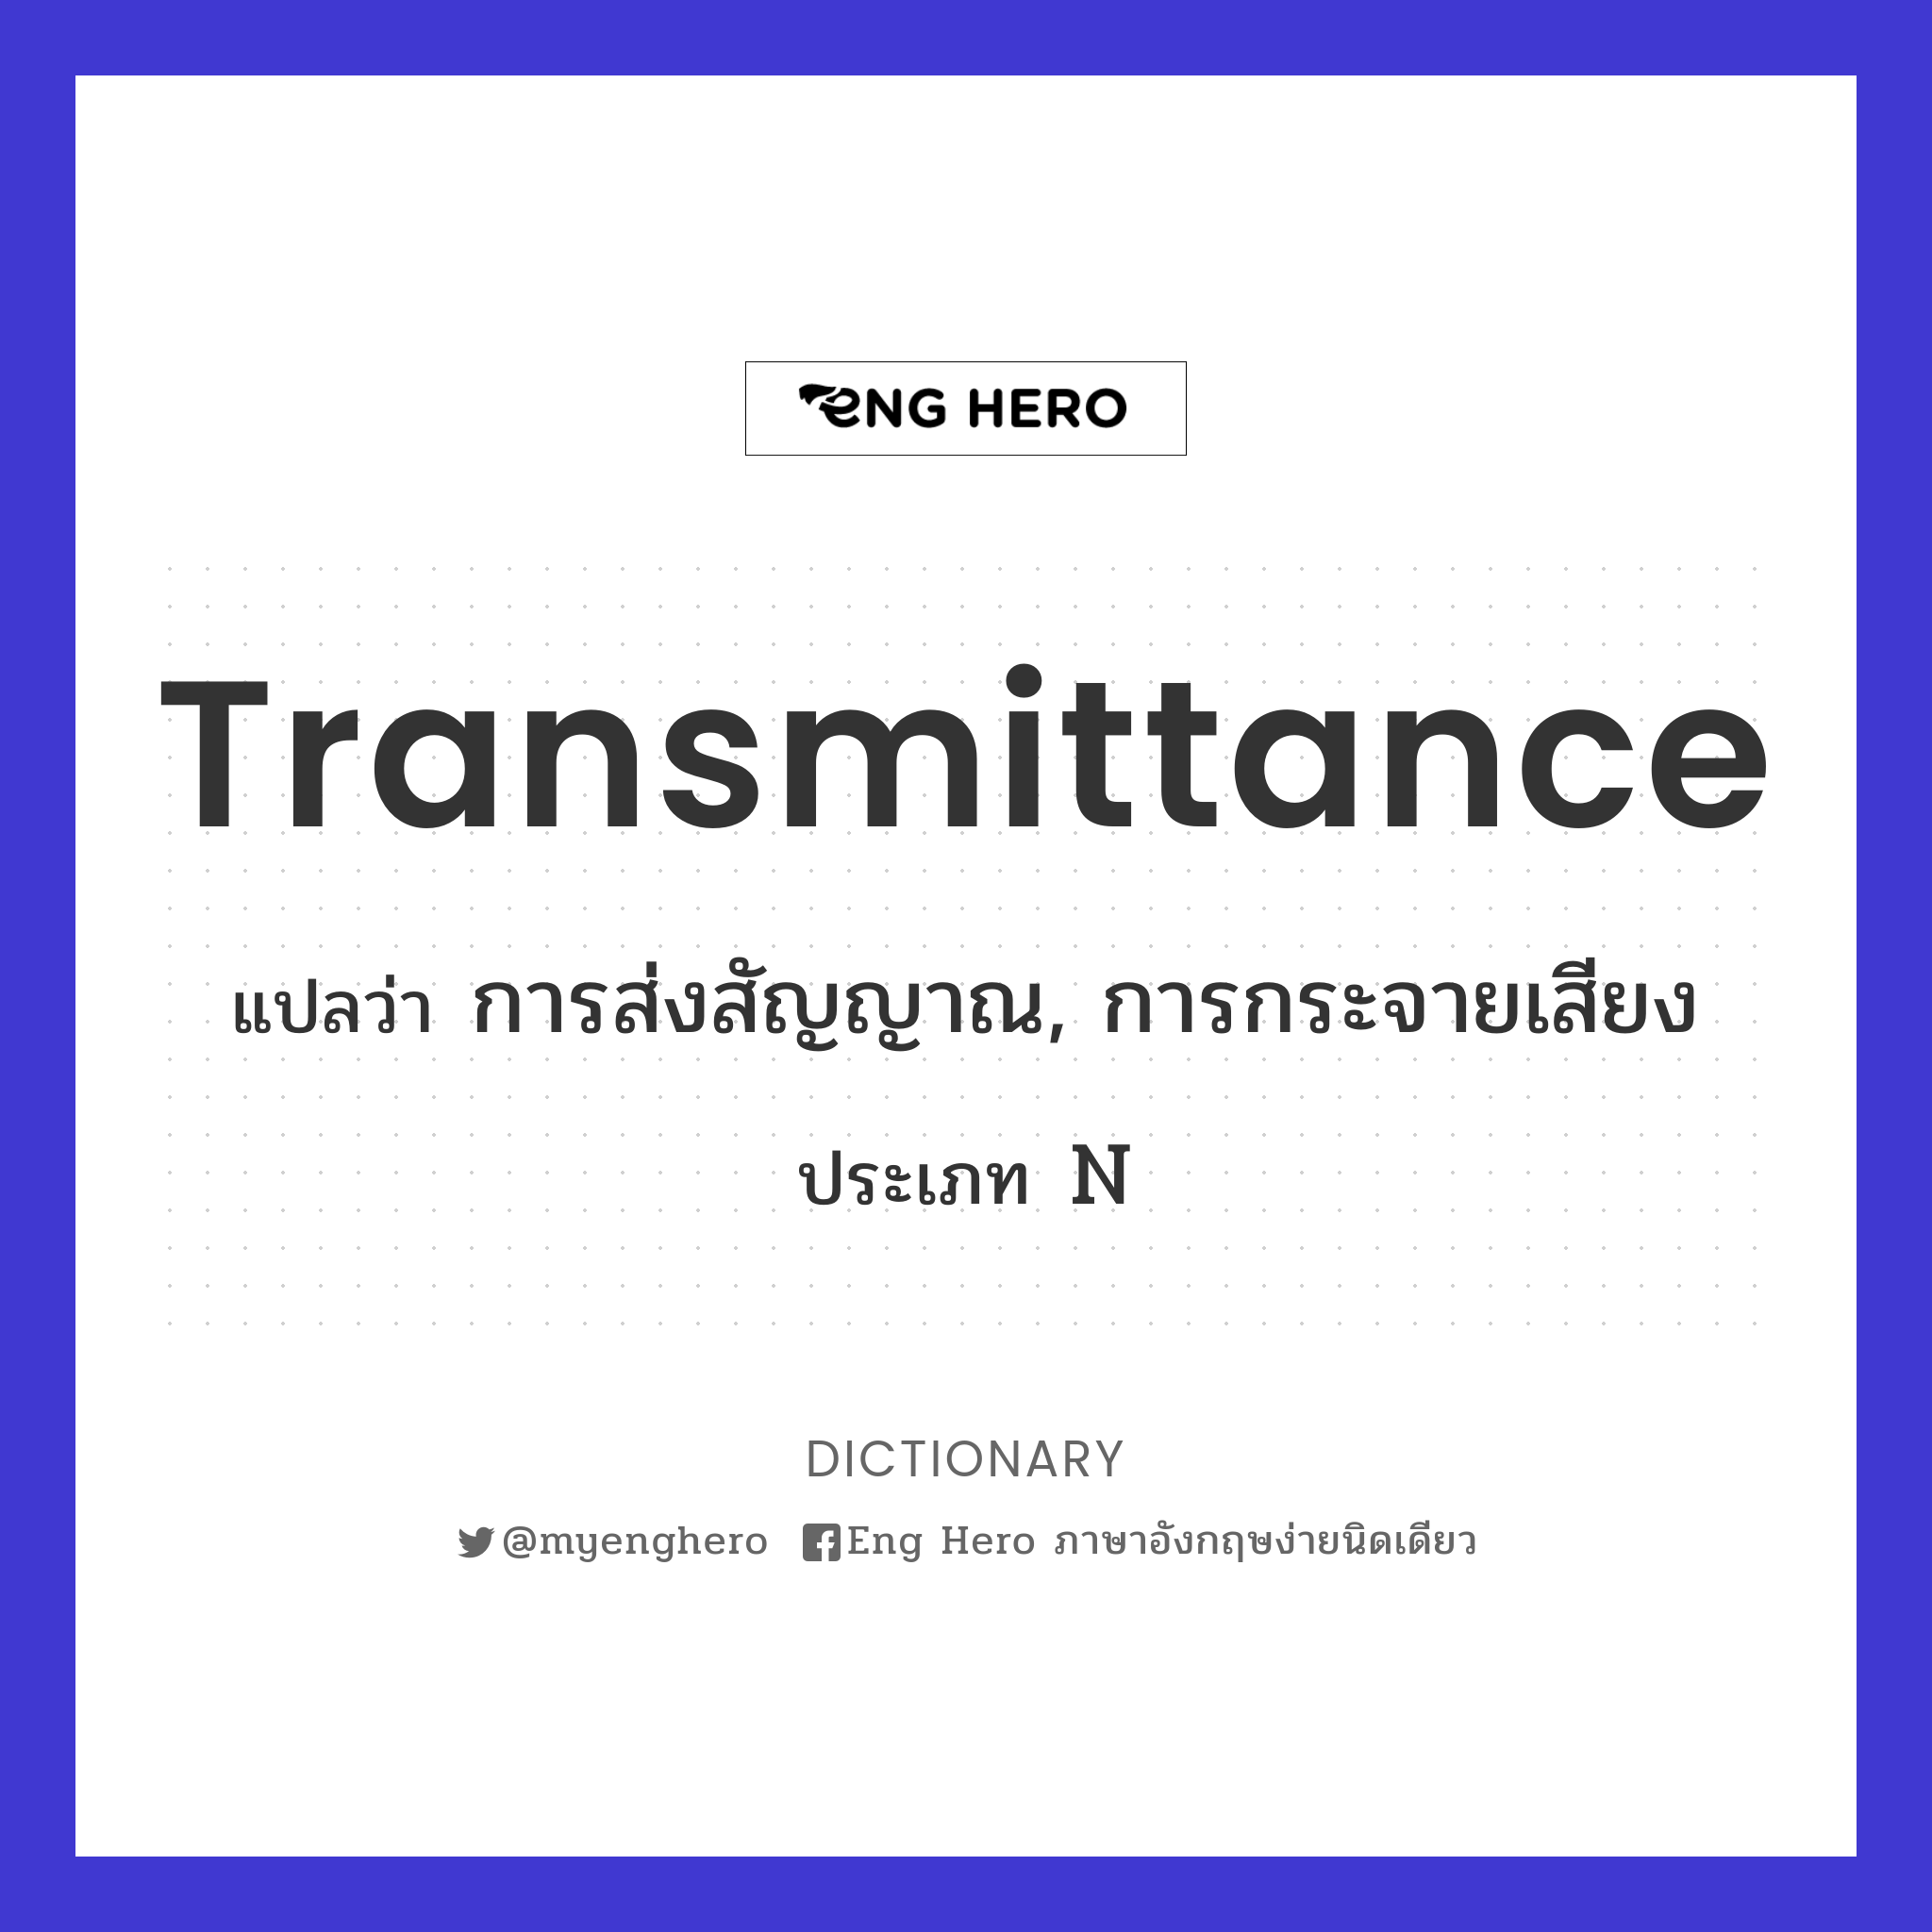 transmittance